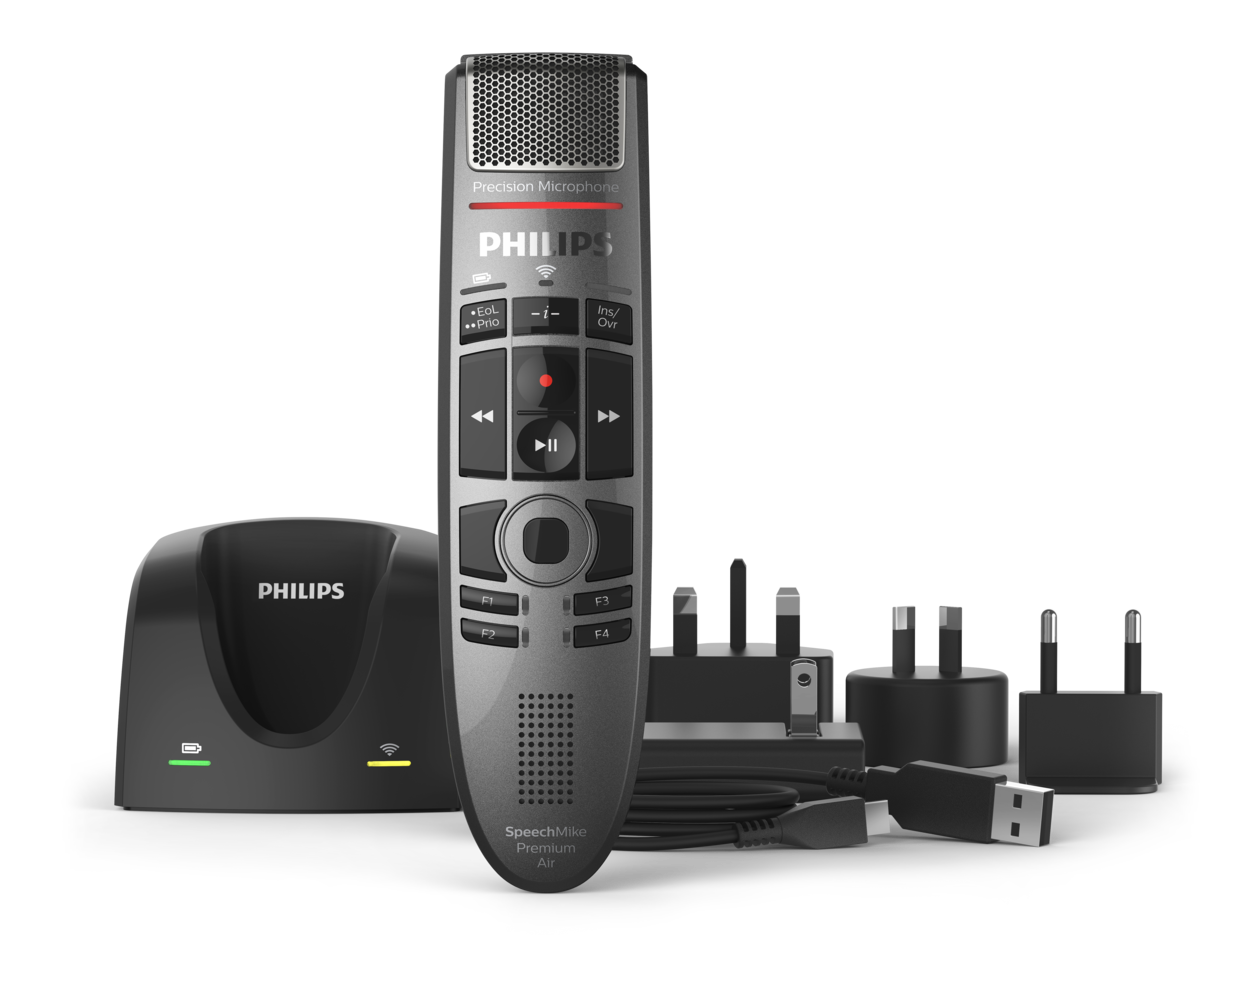 Philips SpeechMike Premium Micrófono de dictado USB 